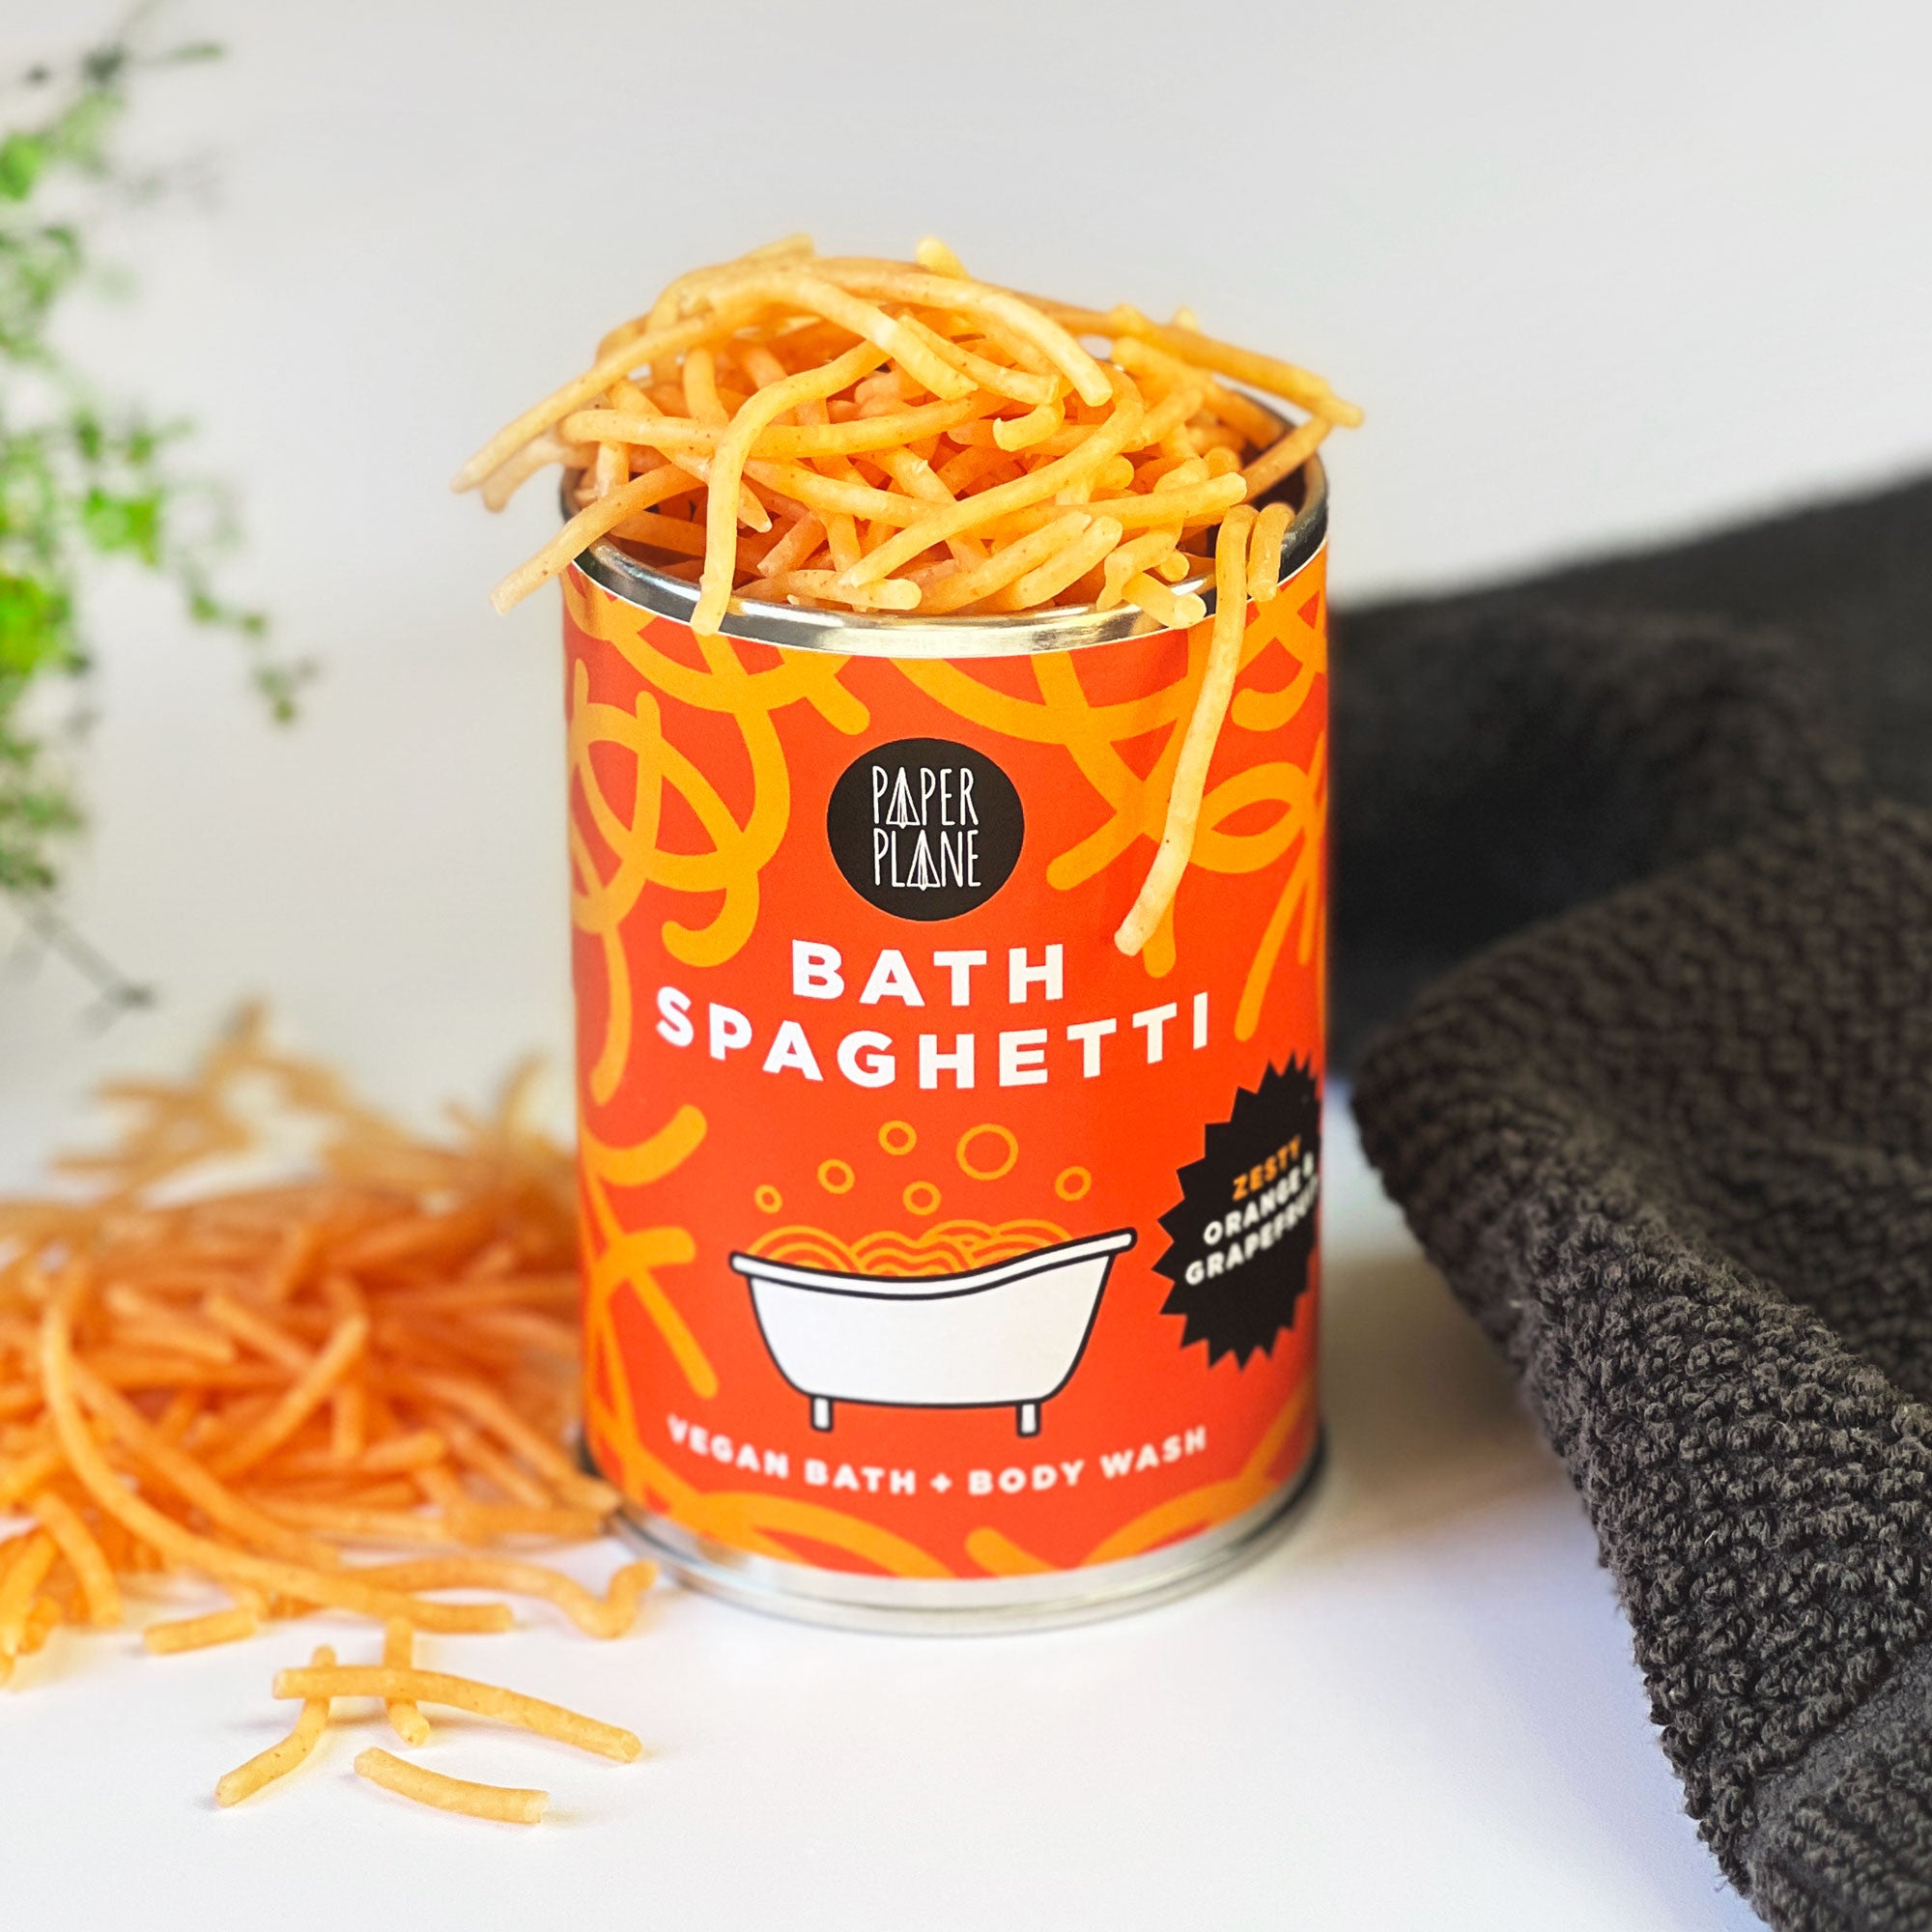 Bath Spaghetti - 100% Natural and Vegan Body Wash